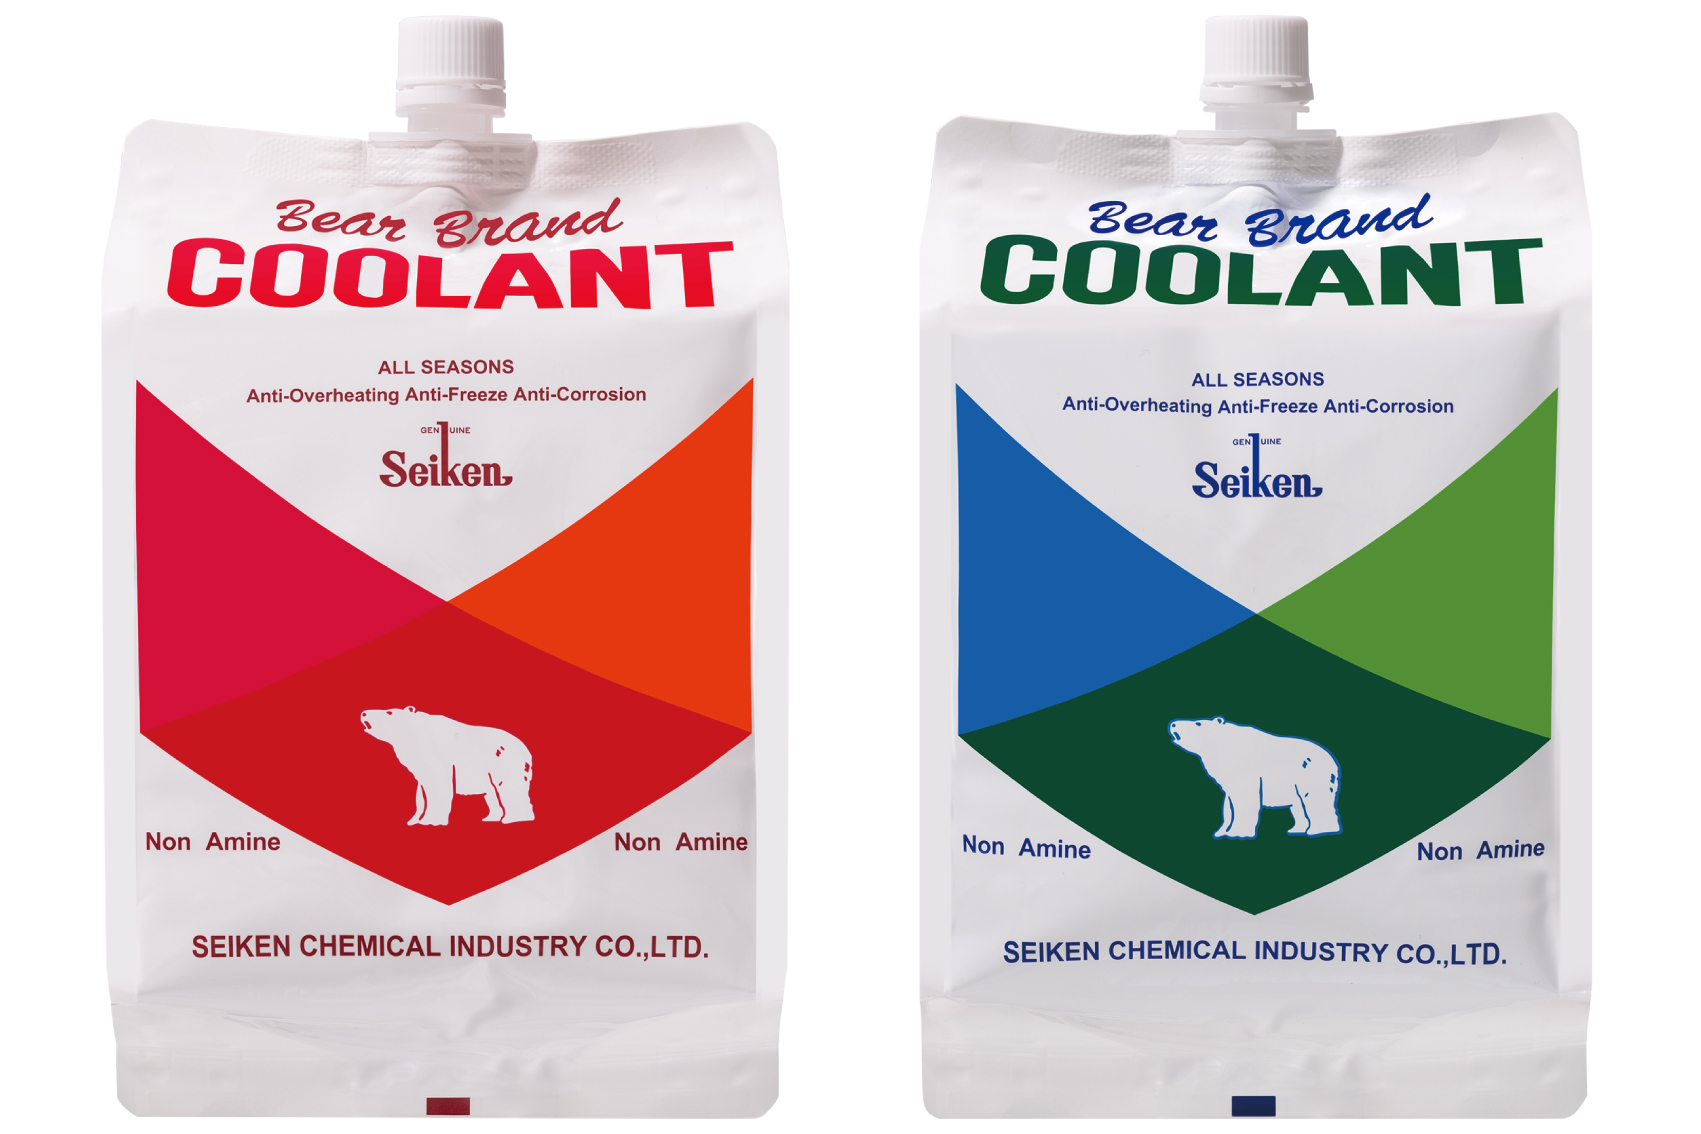 Bear Brand Coolant